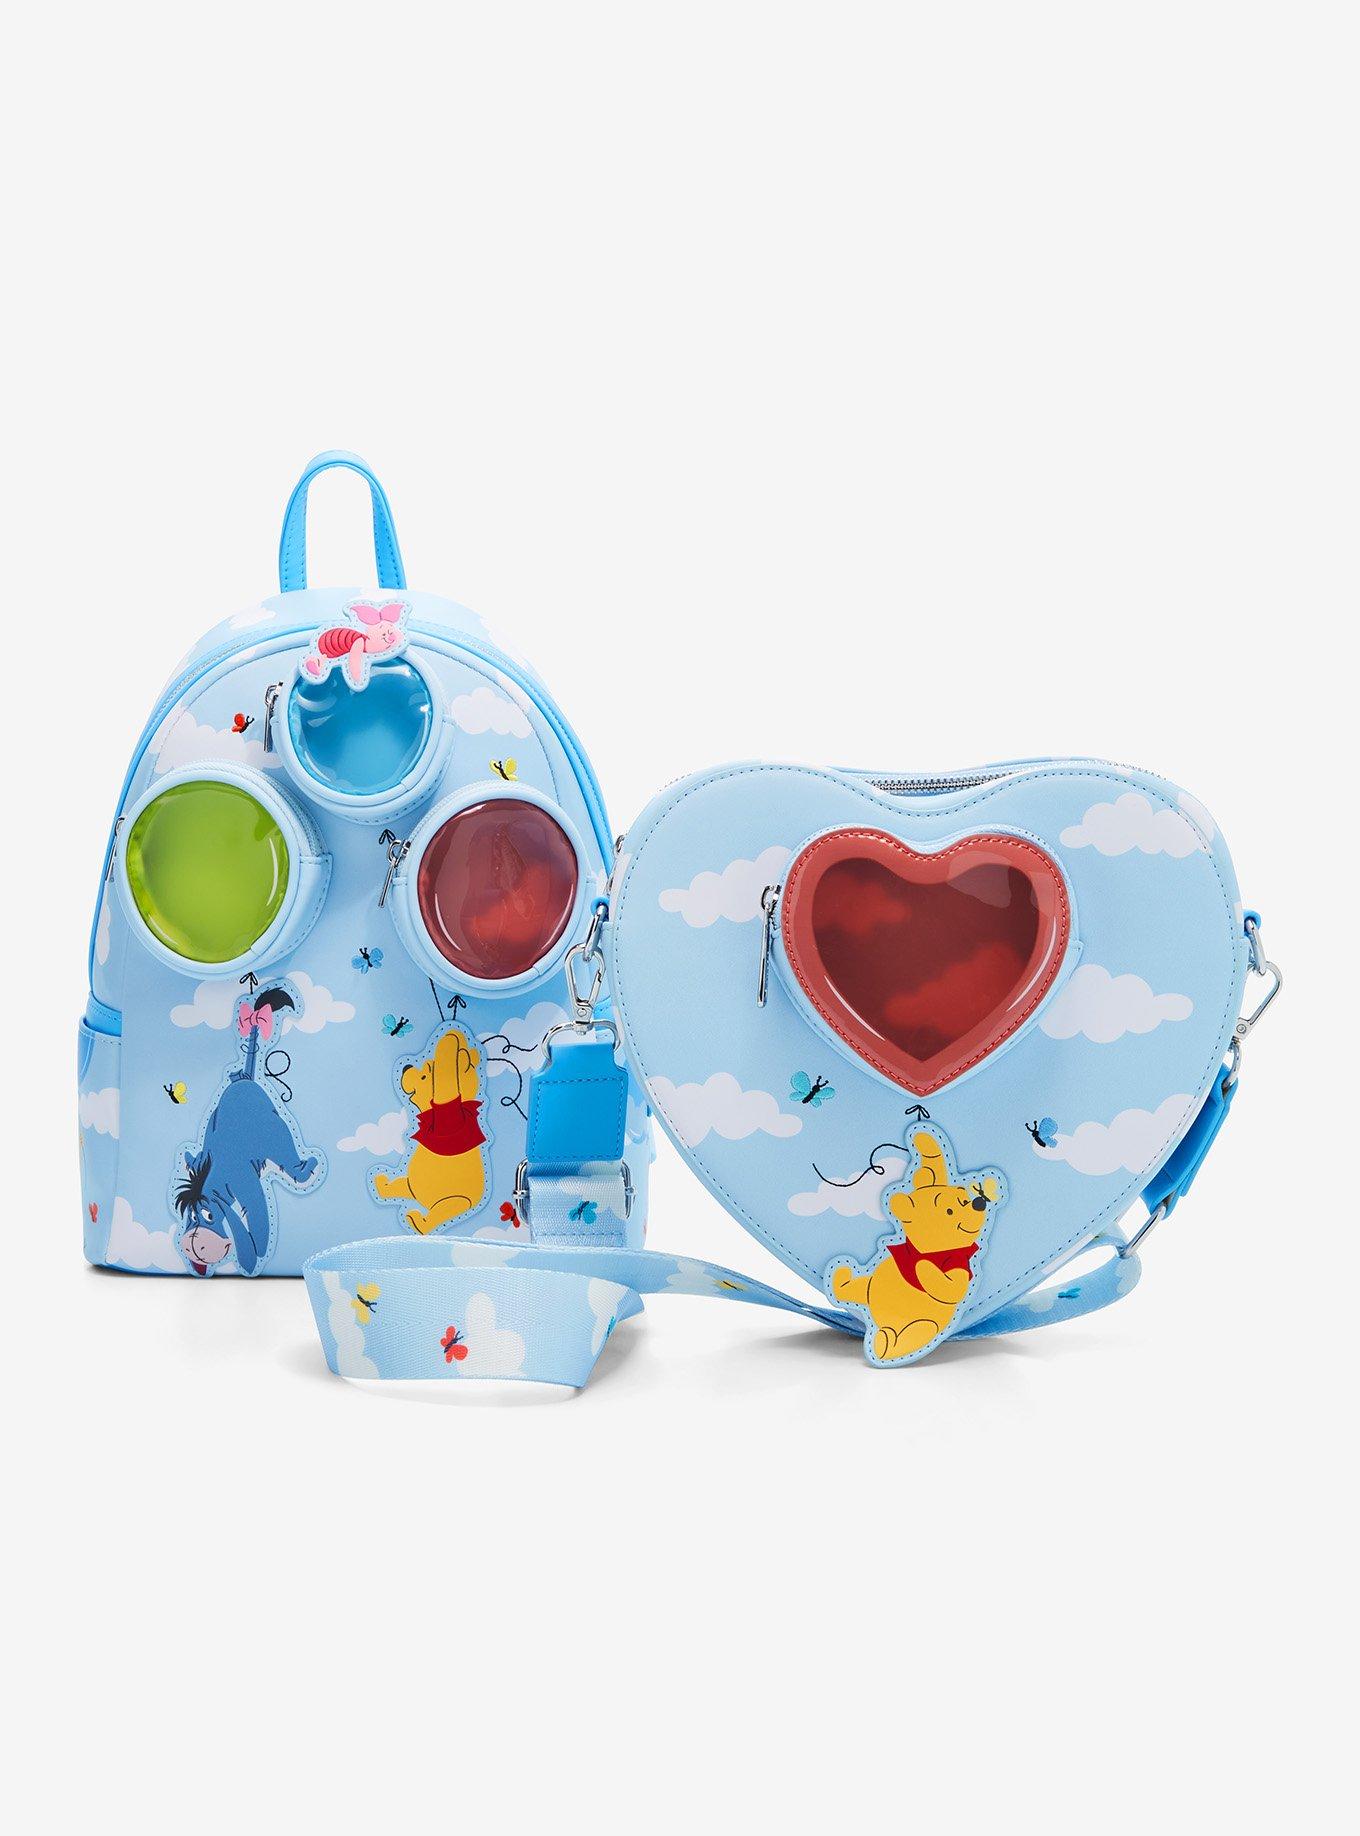 Loungefly Disney Winnie The Pooh Balloons Heart Crossbody Bag